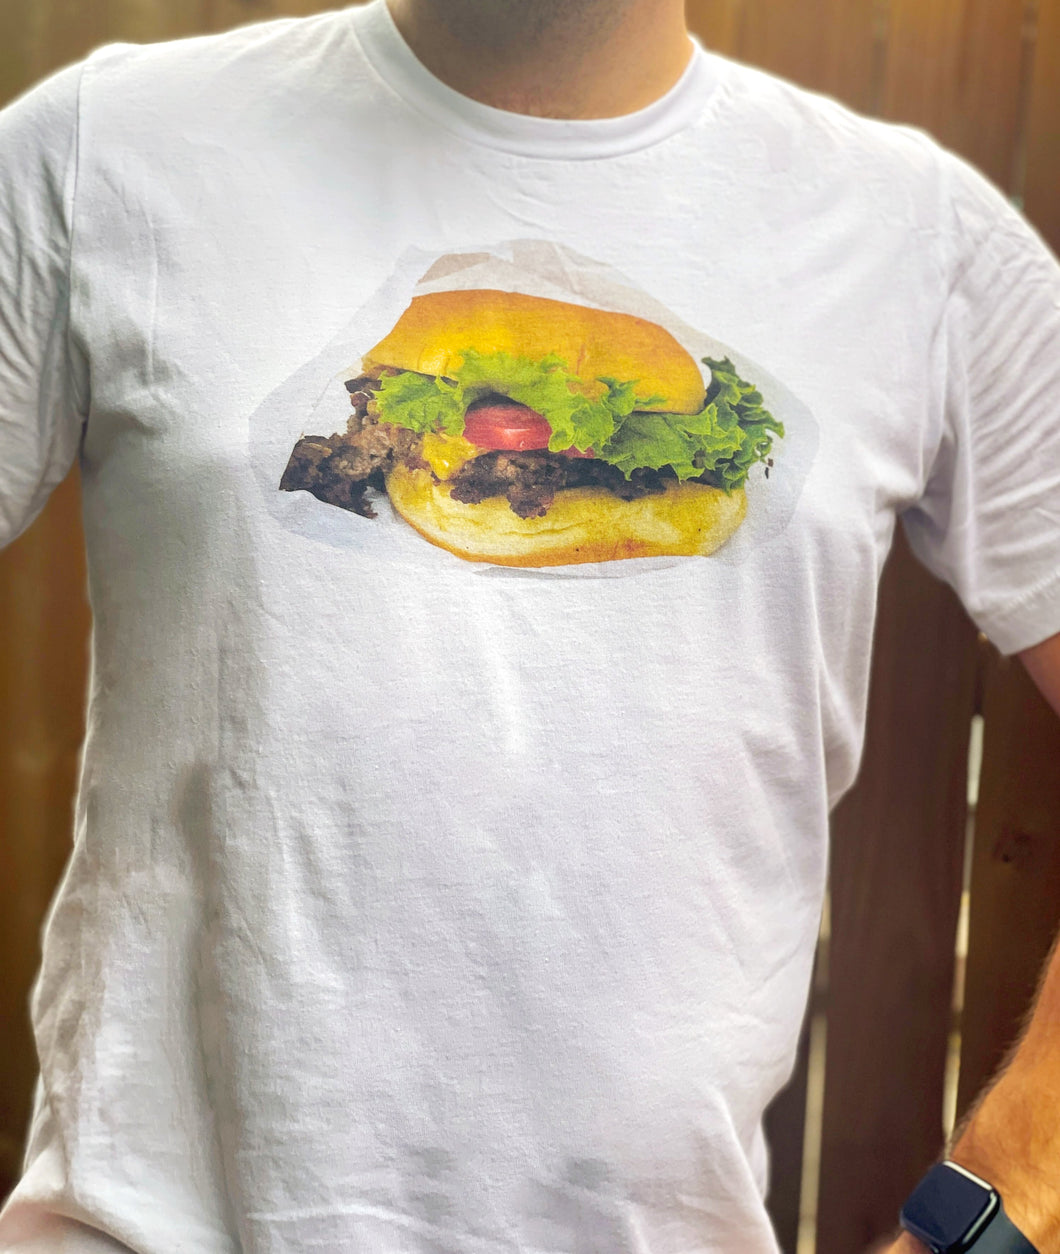 The Hamburger and Cheese Sandwich T-Shirt